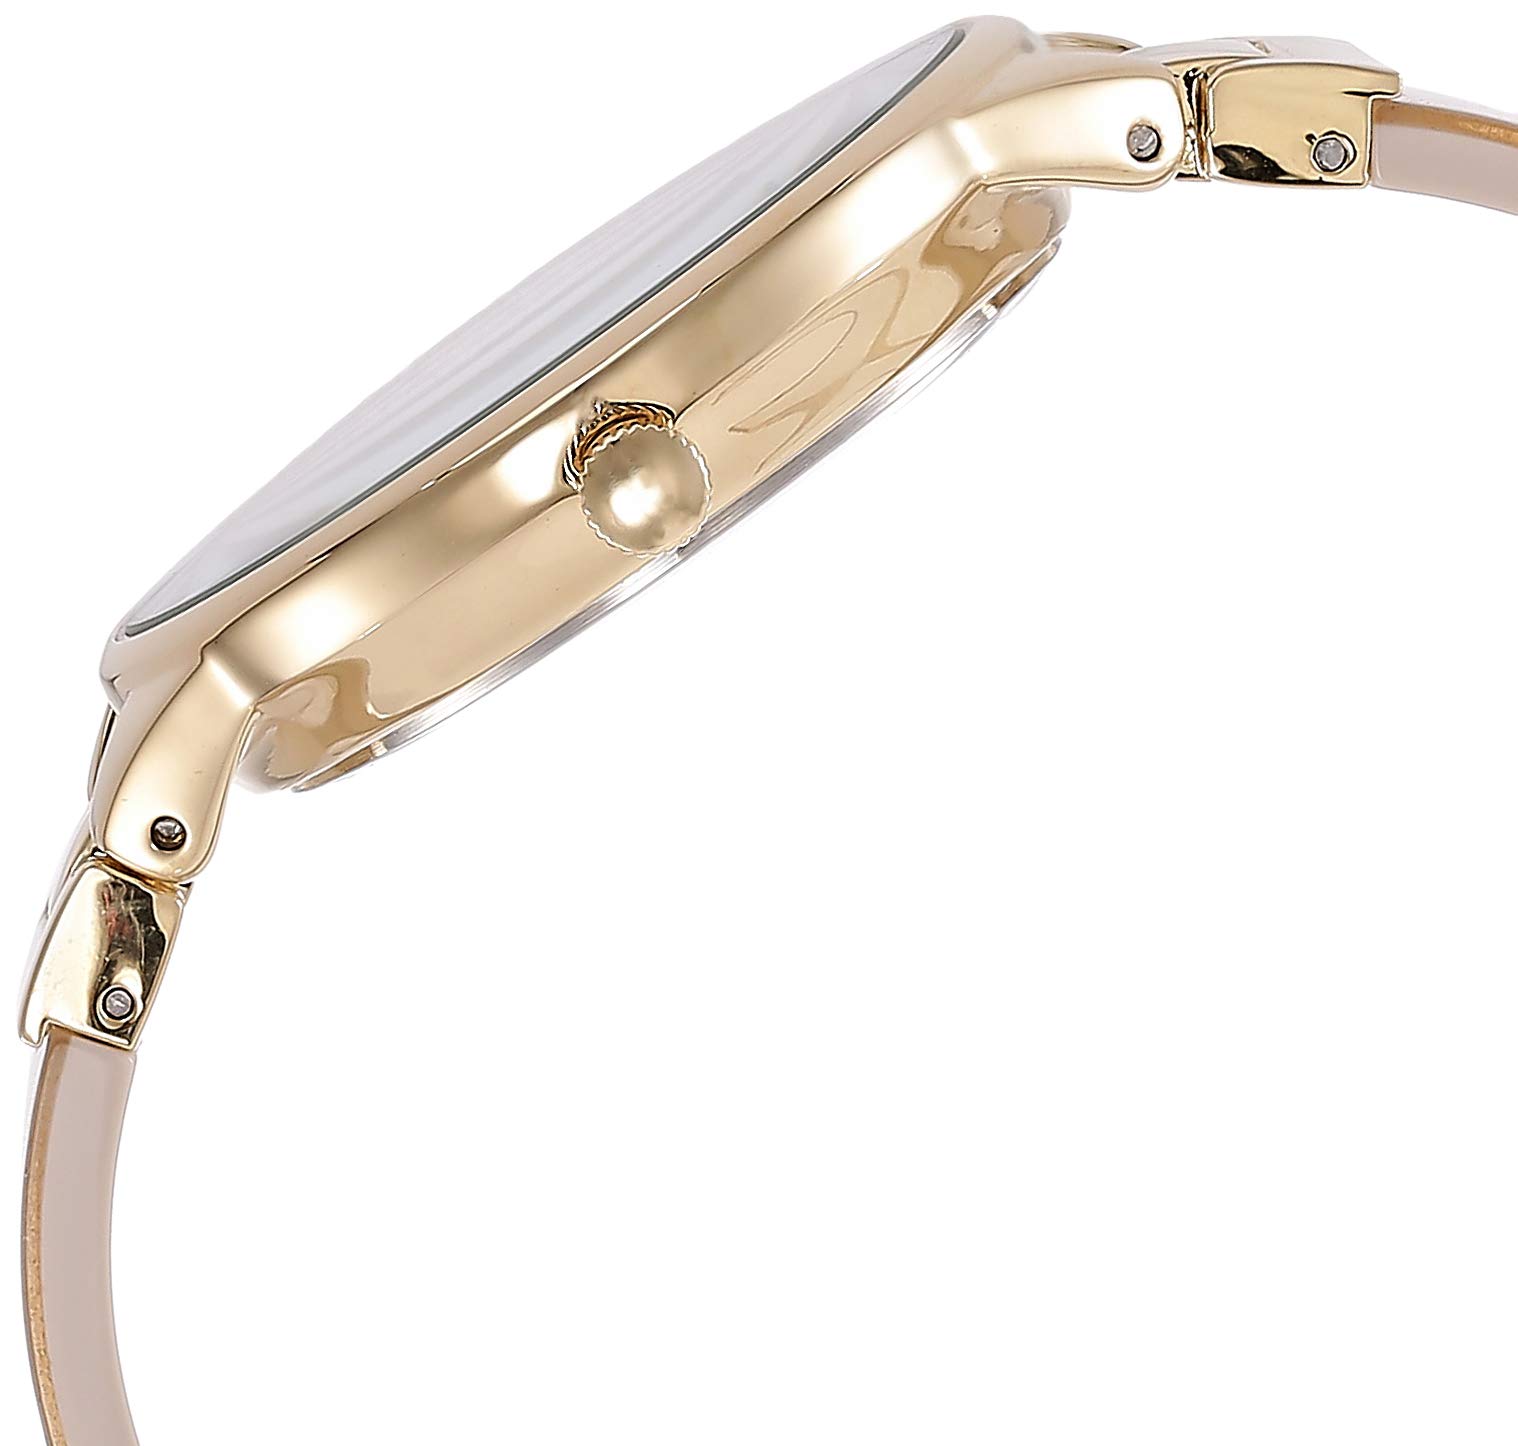 Anne Klein Women's Premium Crystal Accented Resin Bangle Watch